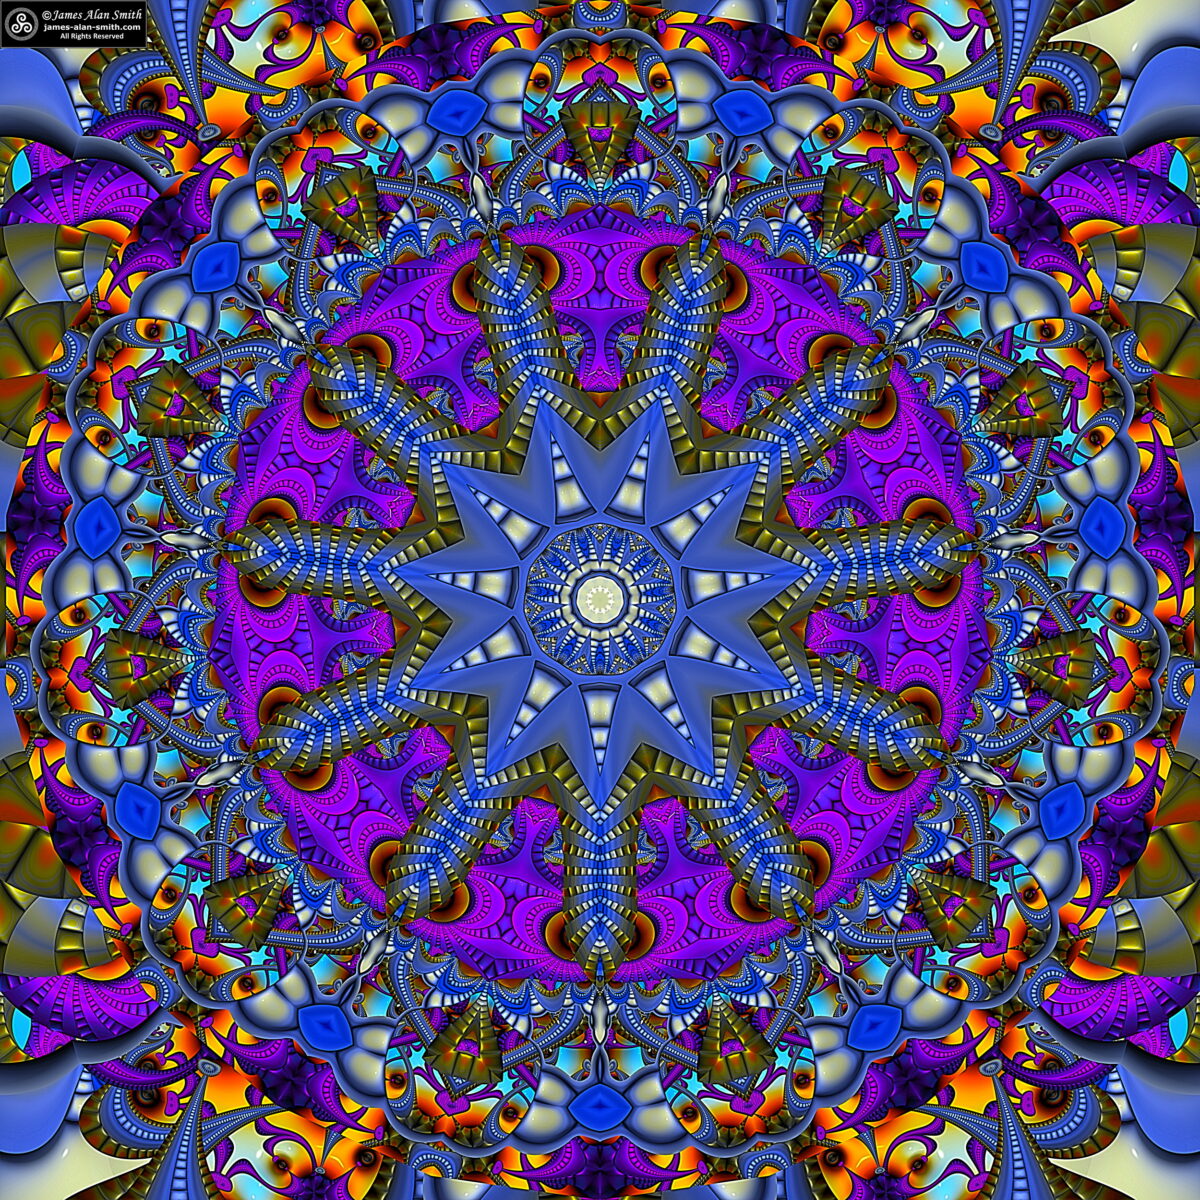 Cosmic Parrot Mandala: Artwork by James Alan Smith